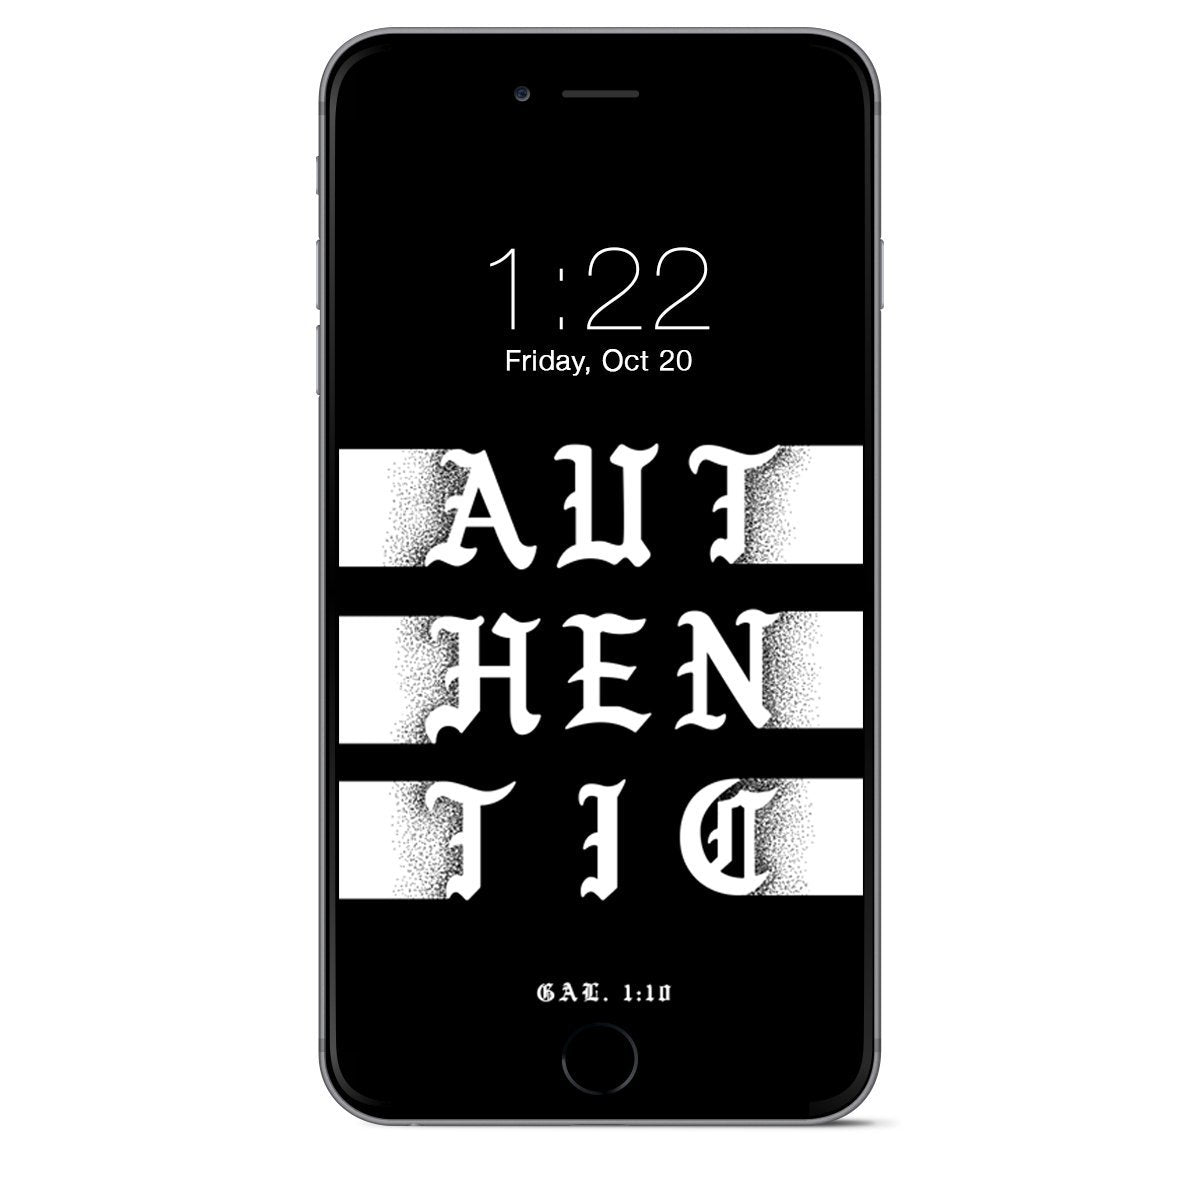 CXXII "Authentic" Phone Wallpaper